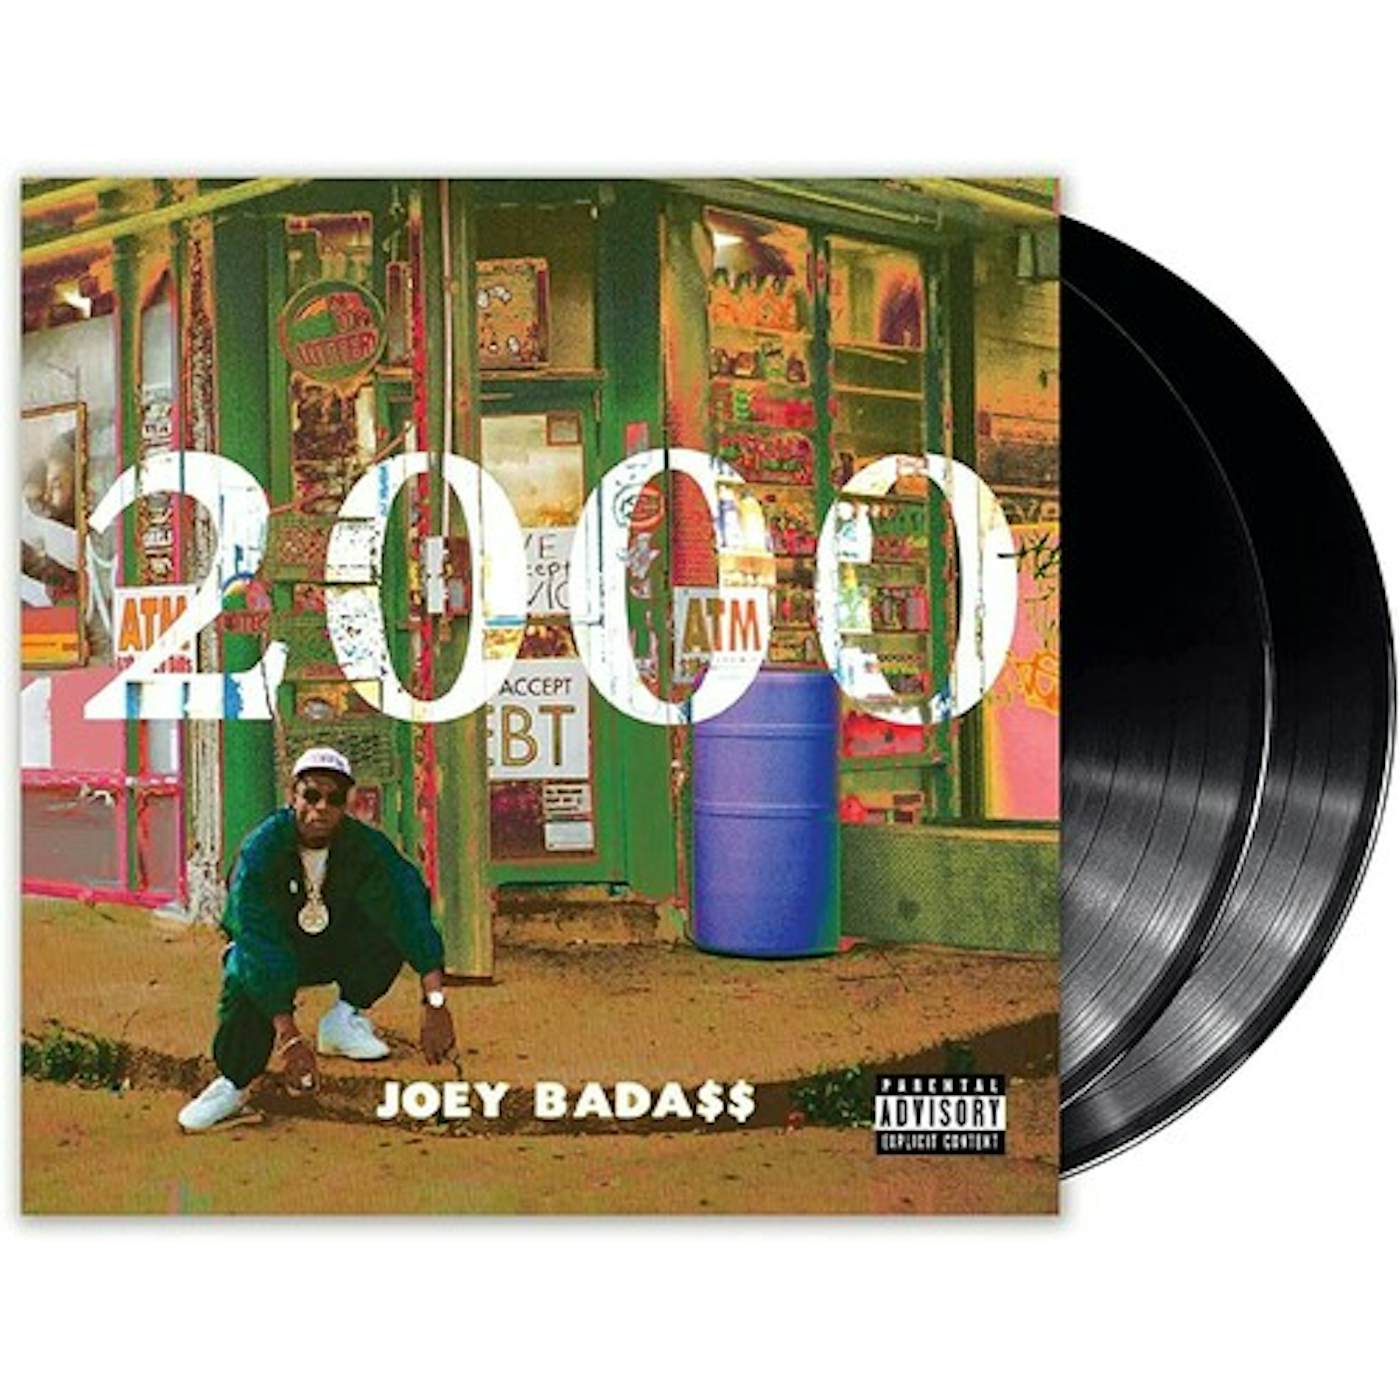 JOEY BADASS (Joey Bada$$) 2000 Vinyl Record